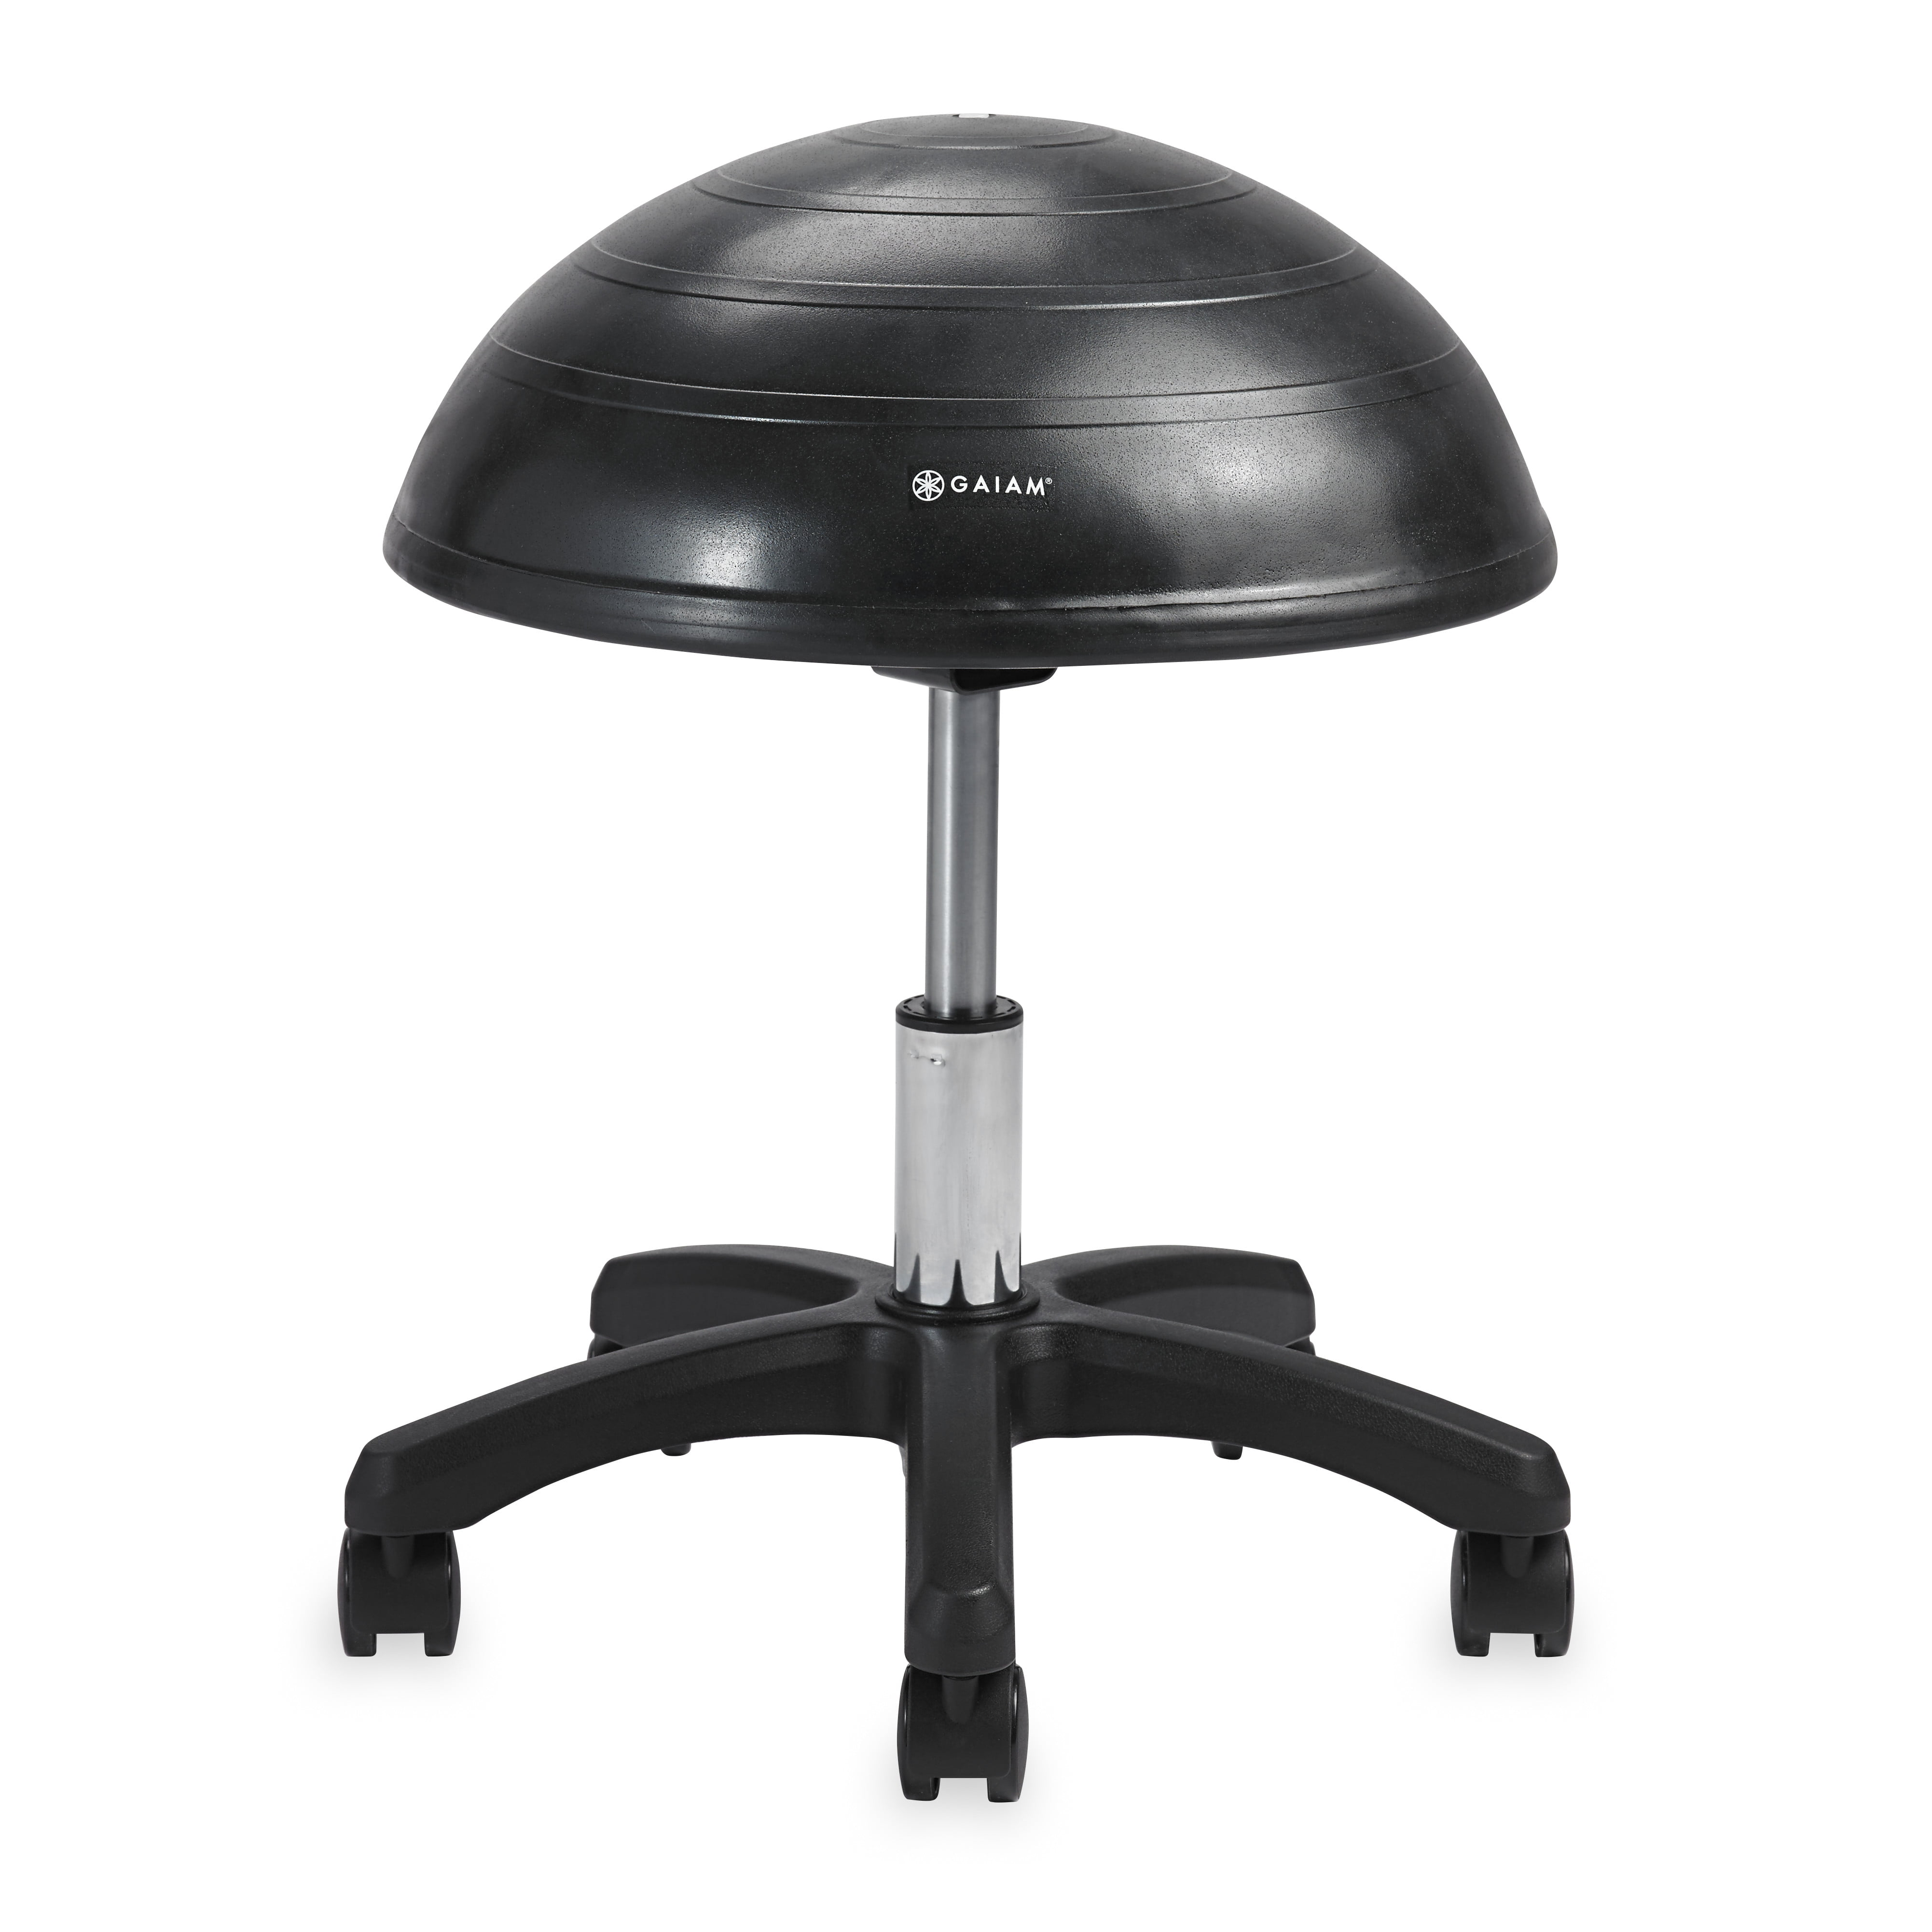 gaiam-23-adjustable-balance-stool-black-walmart